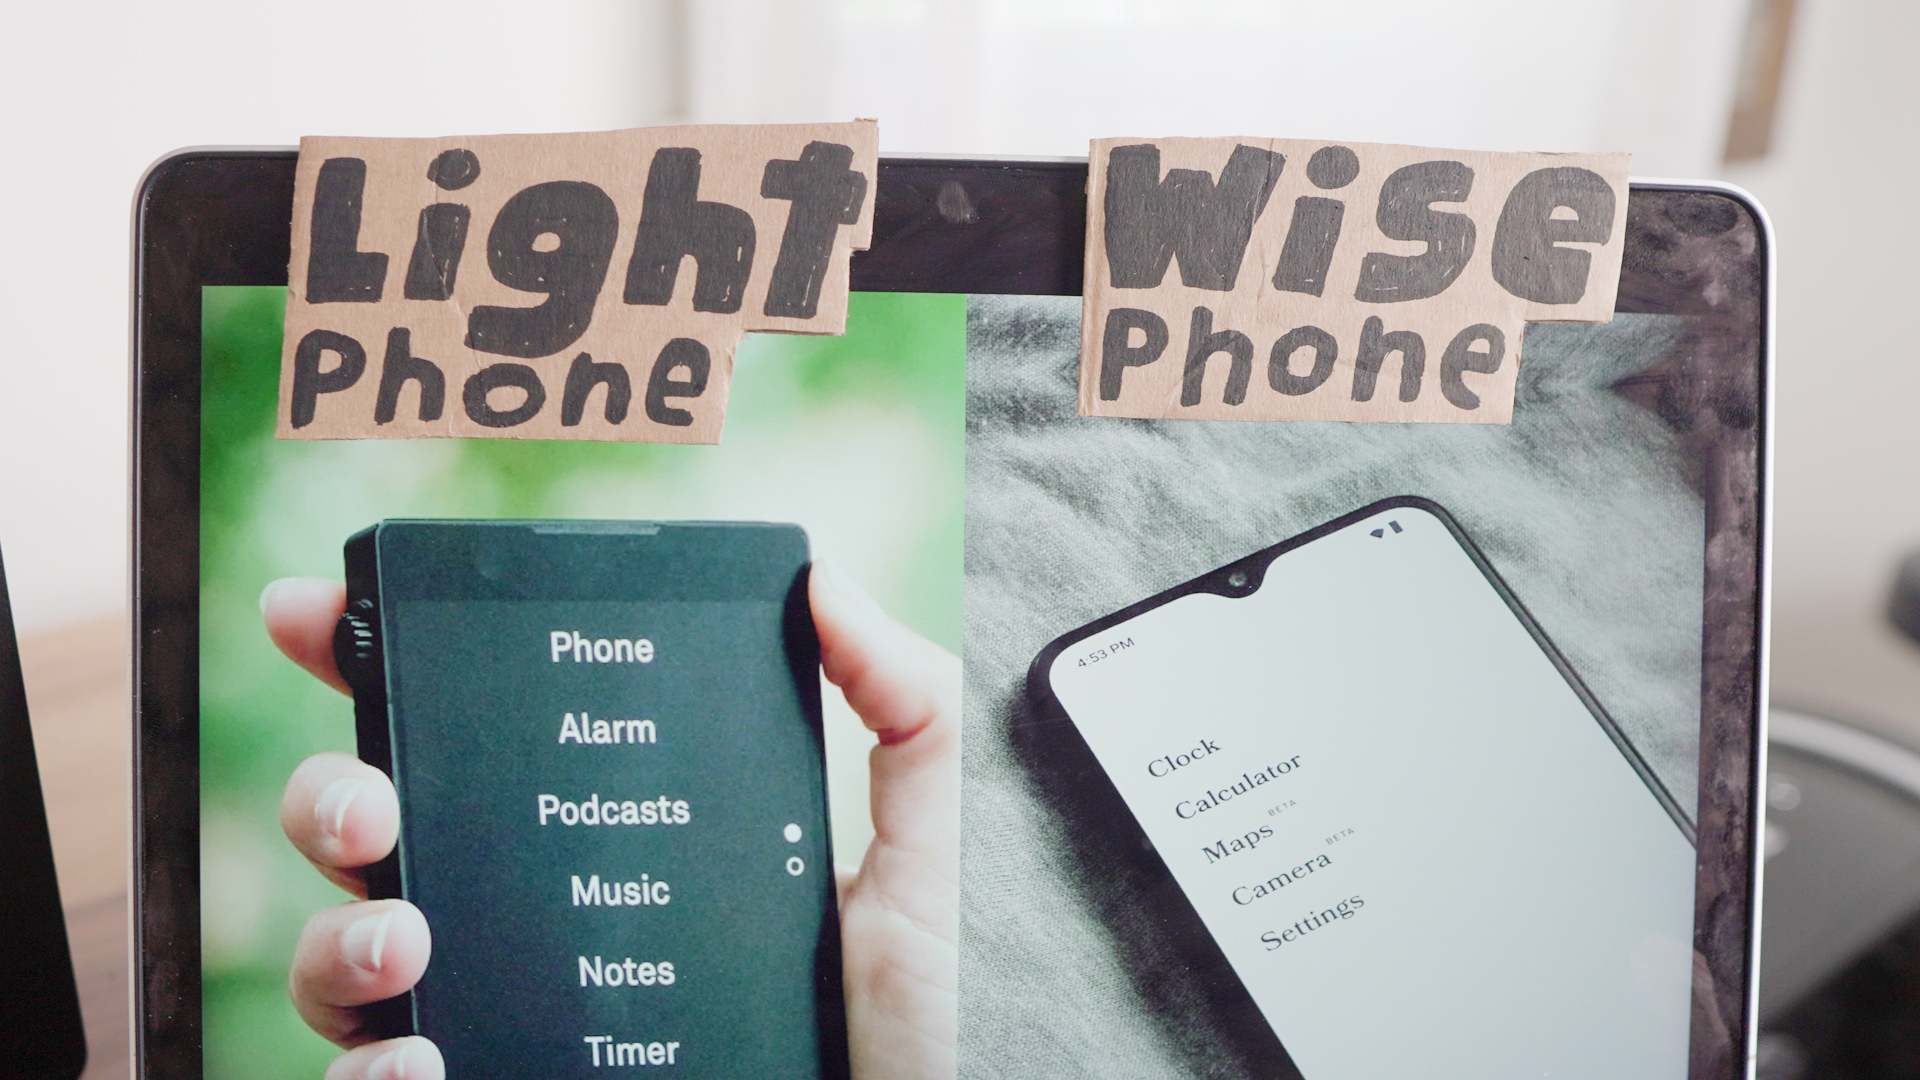 Light Phone vs Wisephone